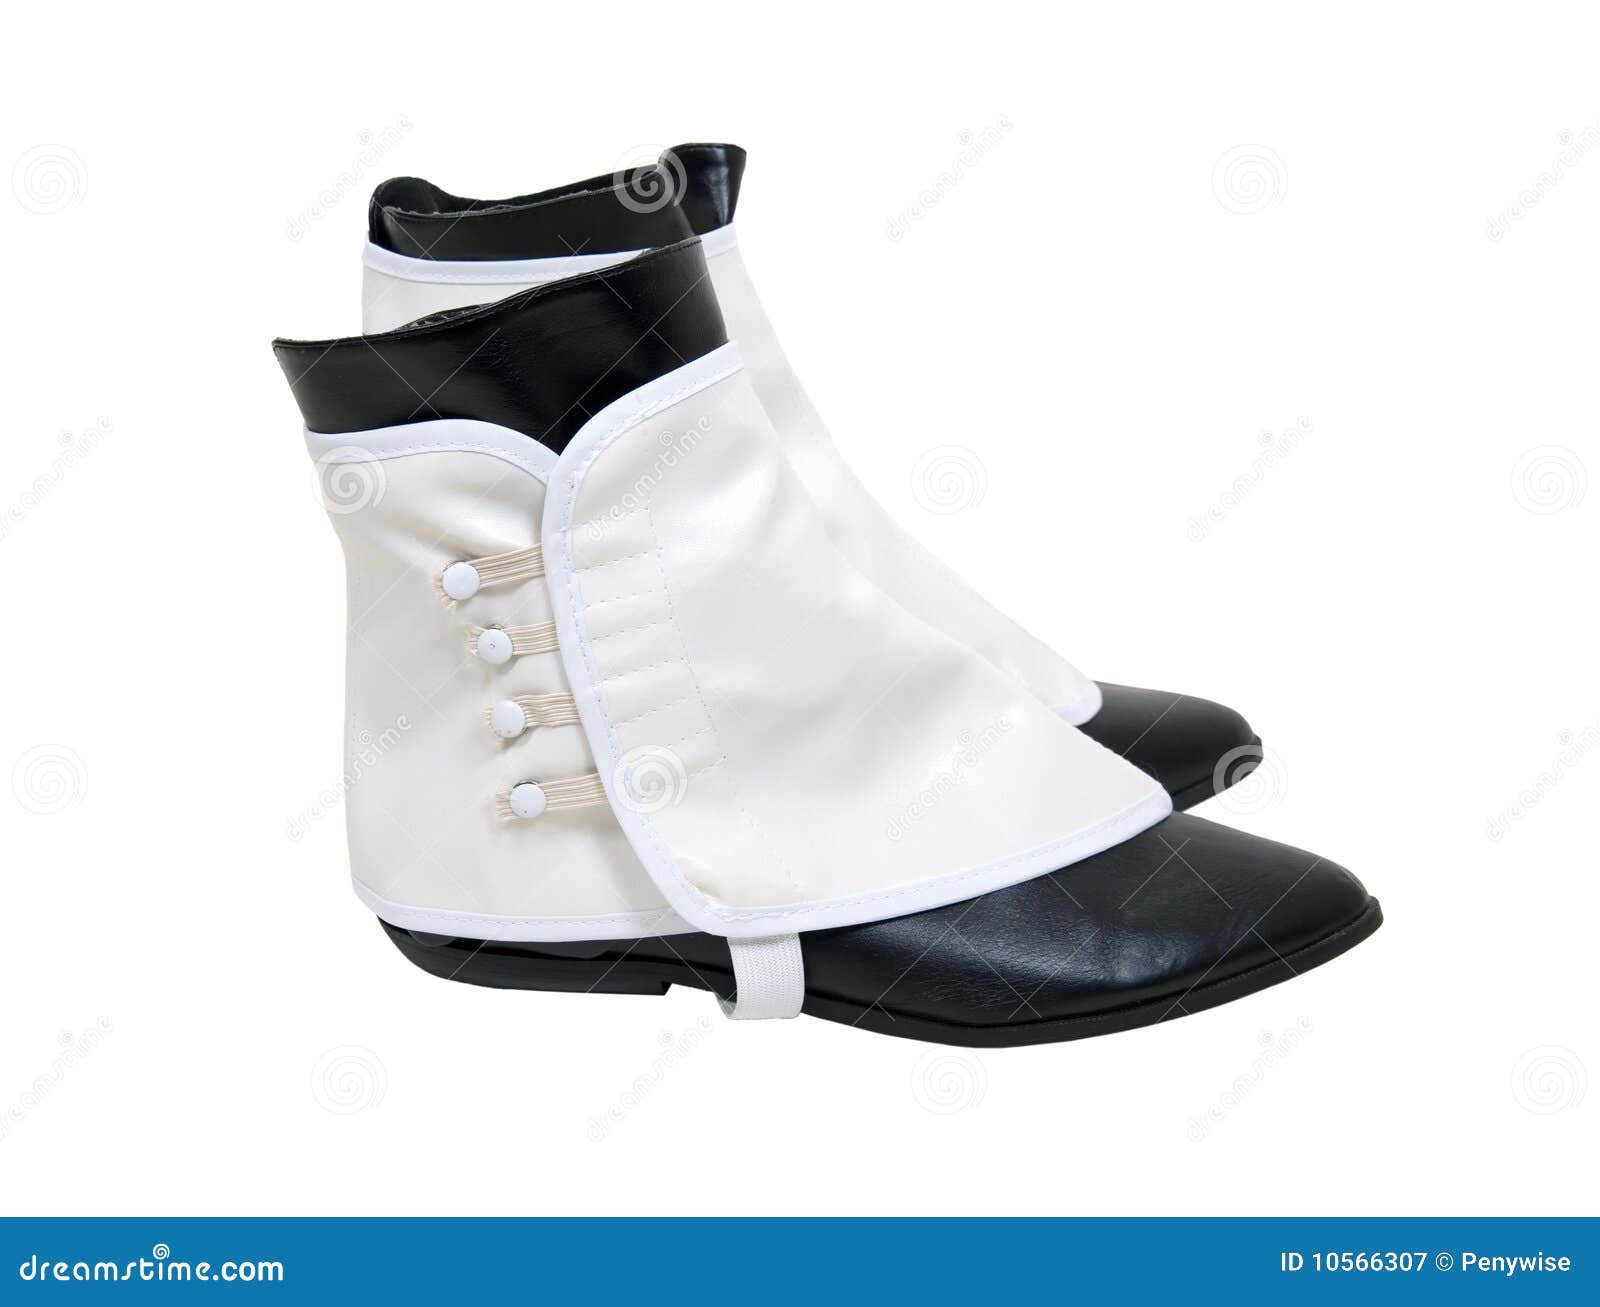 black boot spats